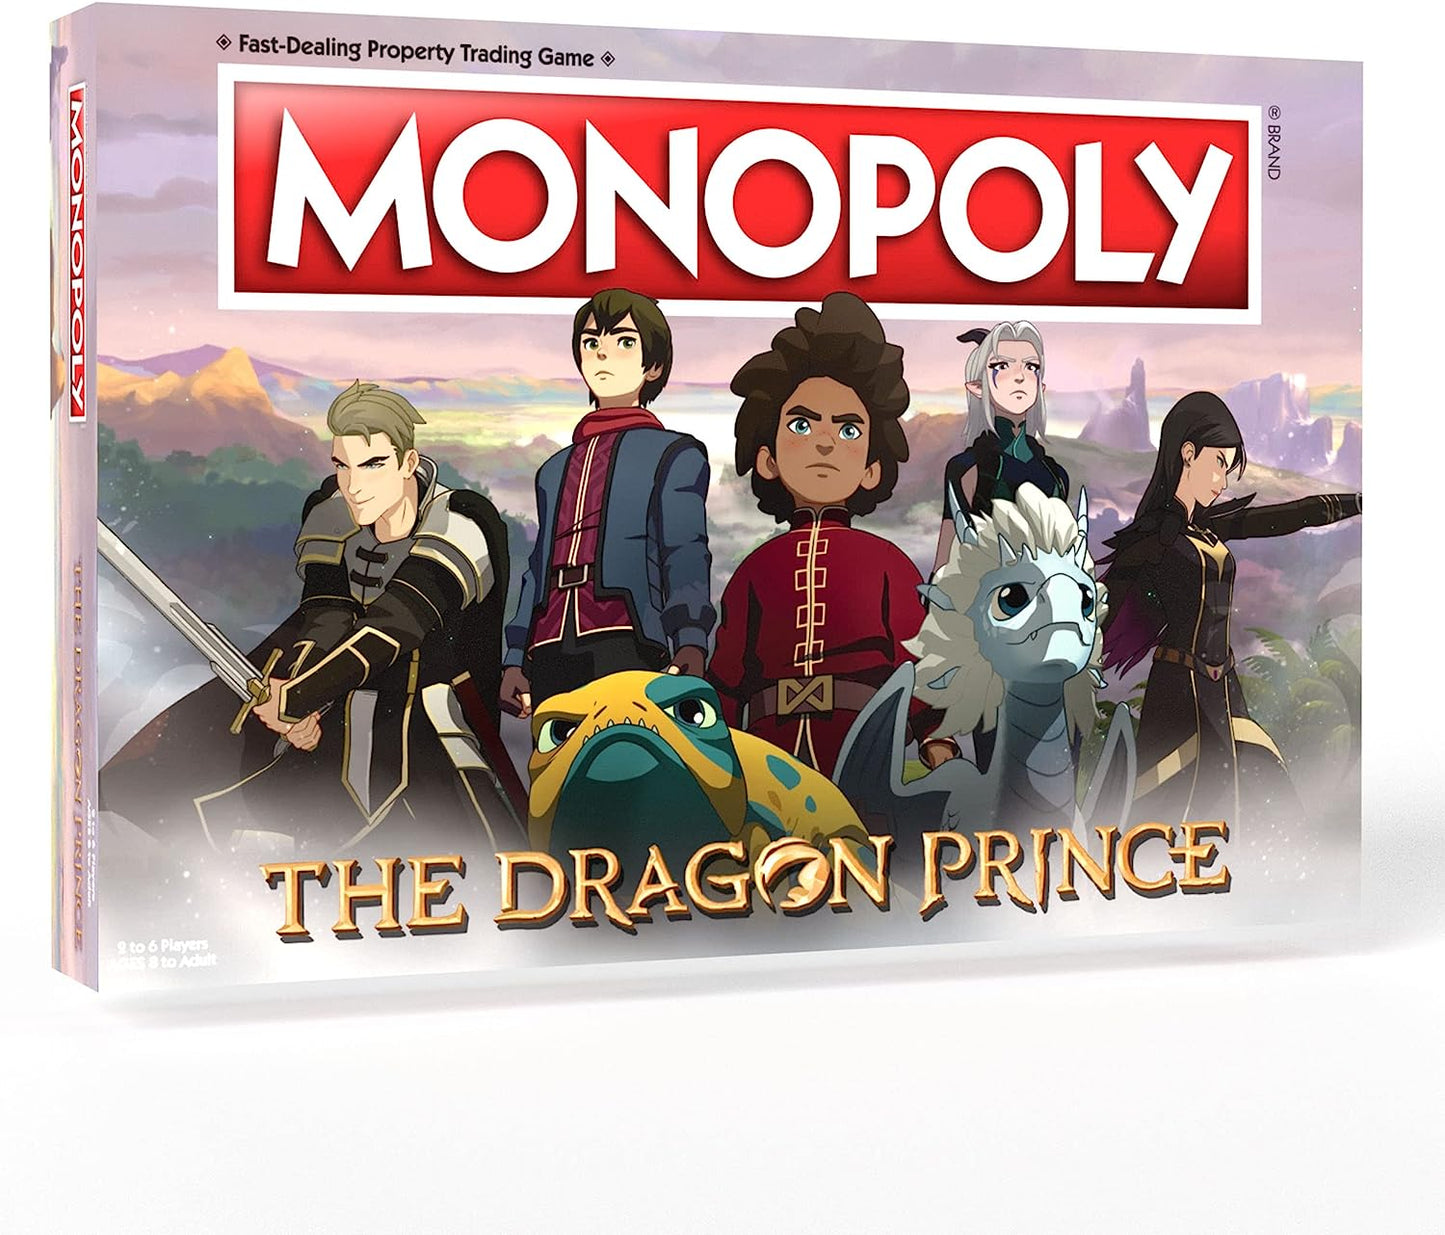 MONOPOLY®: The Dragon Prince